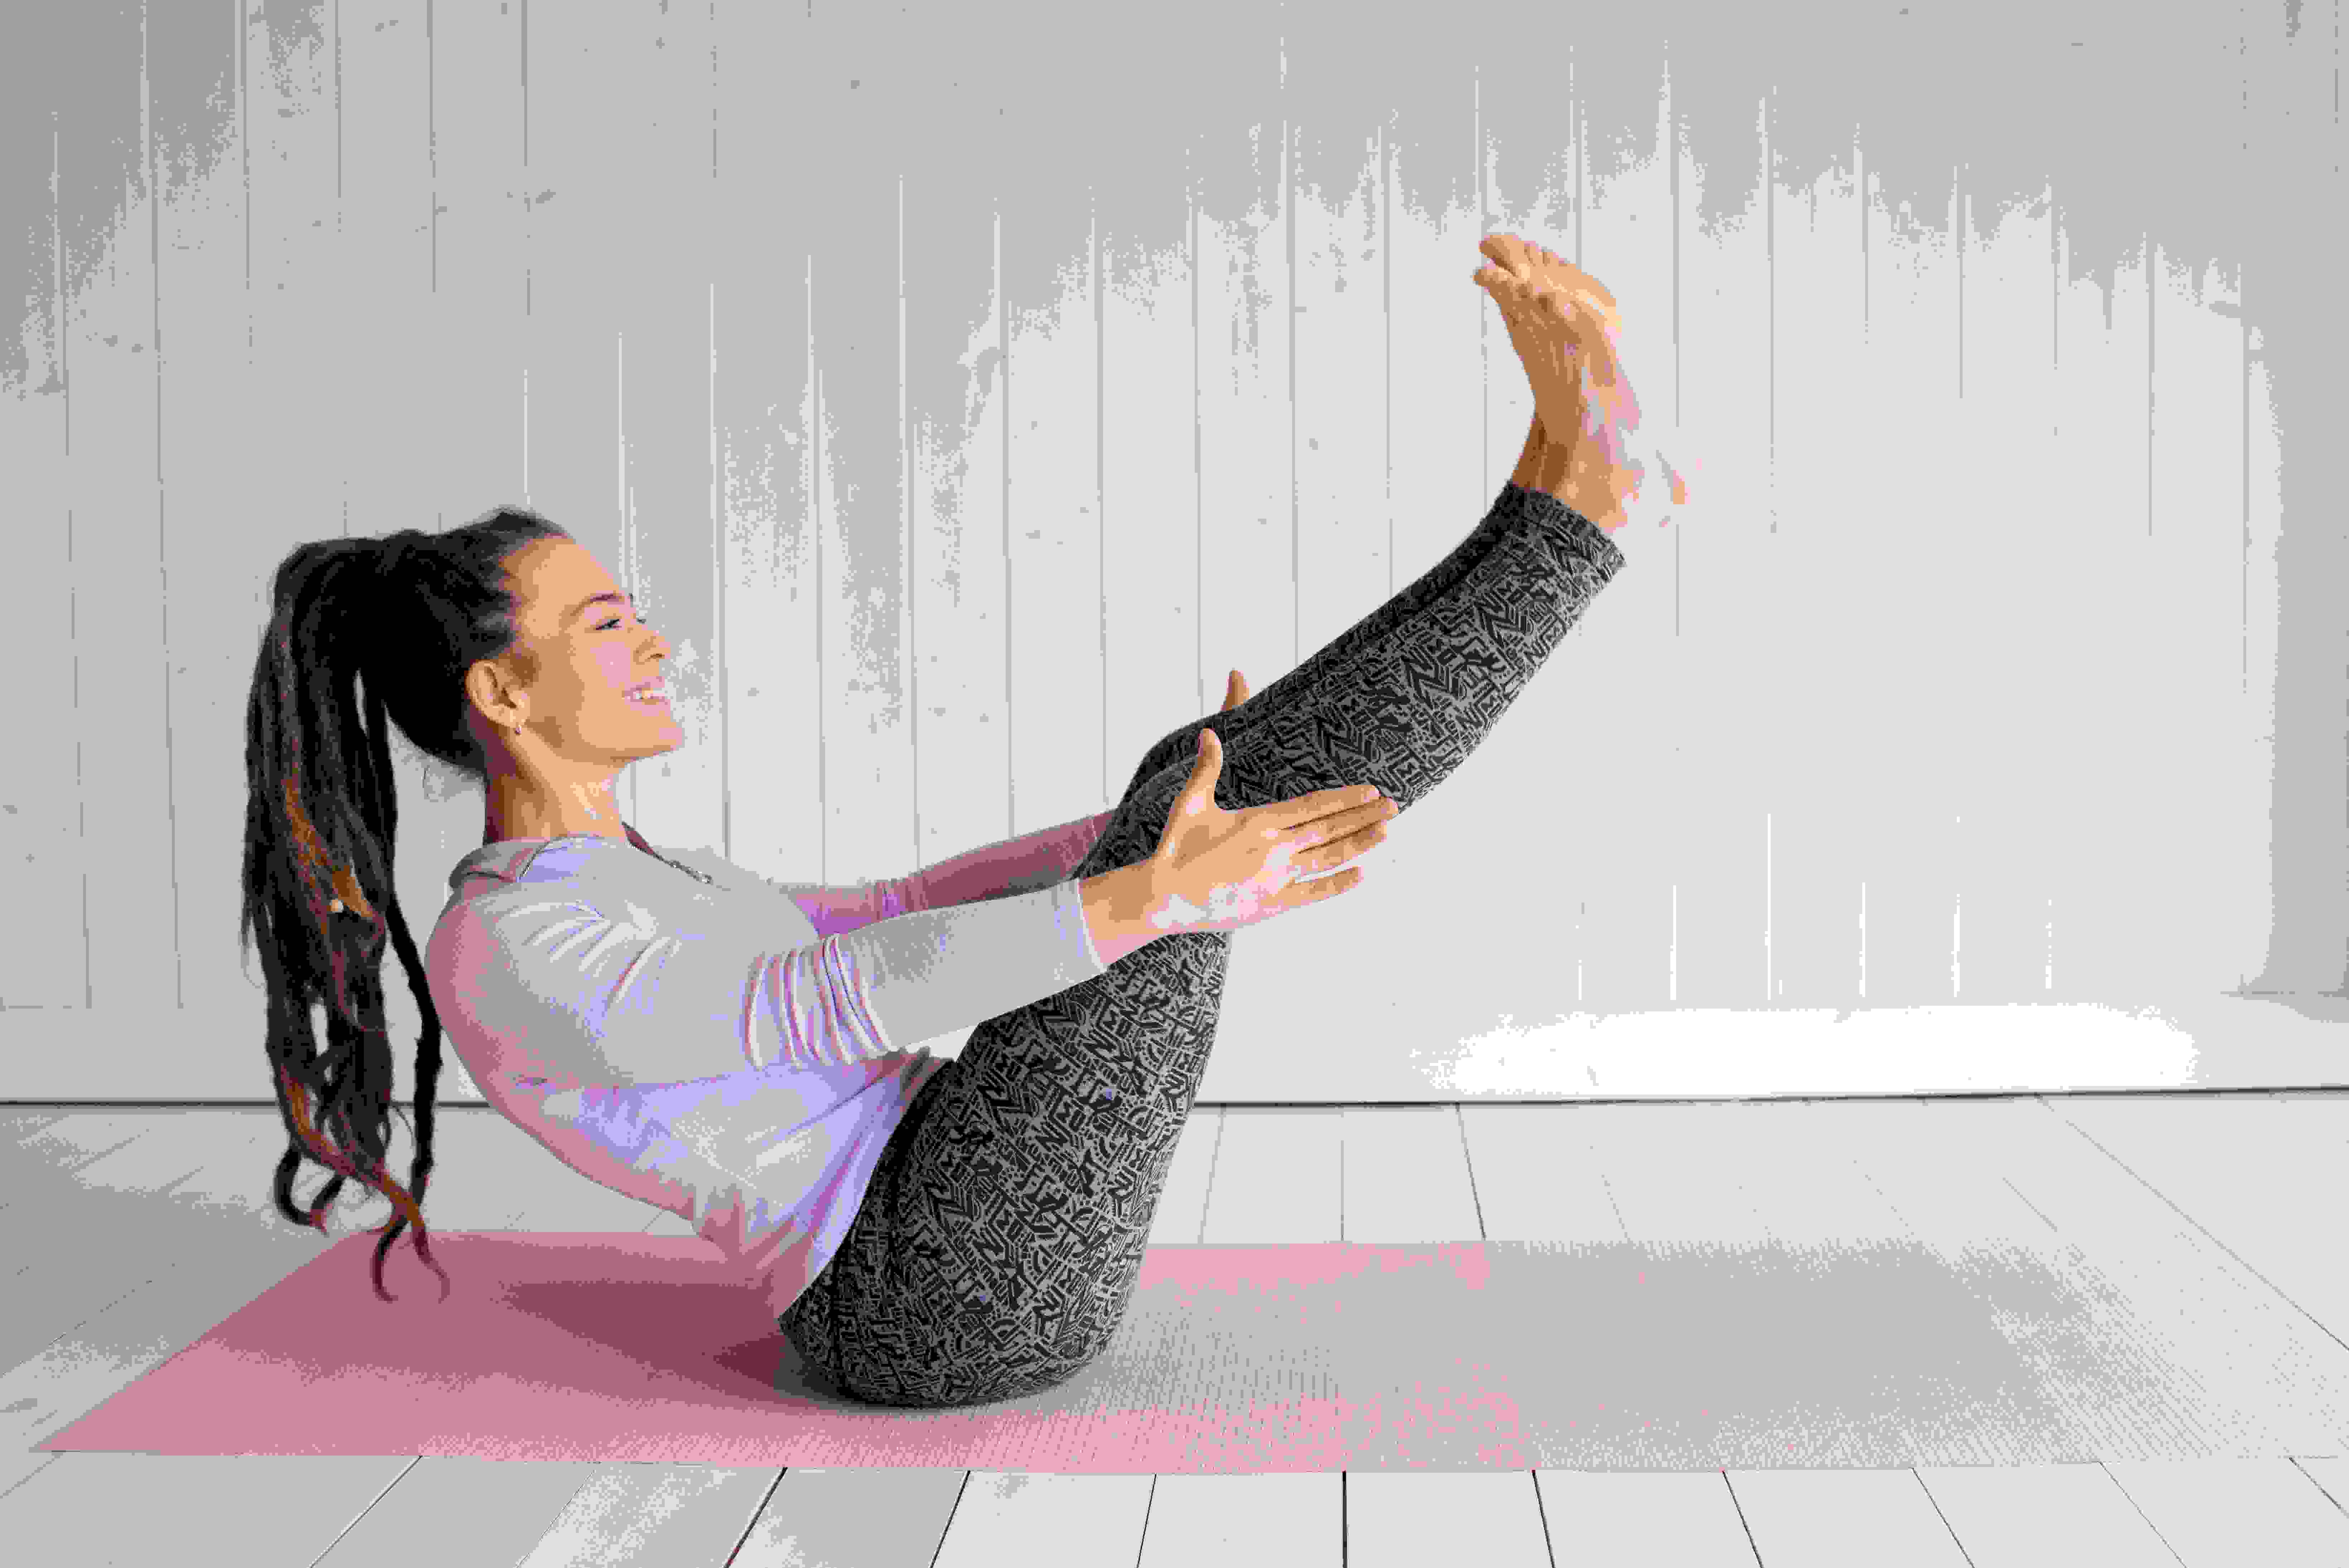 Praticar power yoga fortalece o corpo e condiciona consciência corporal